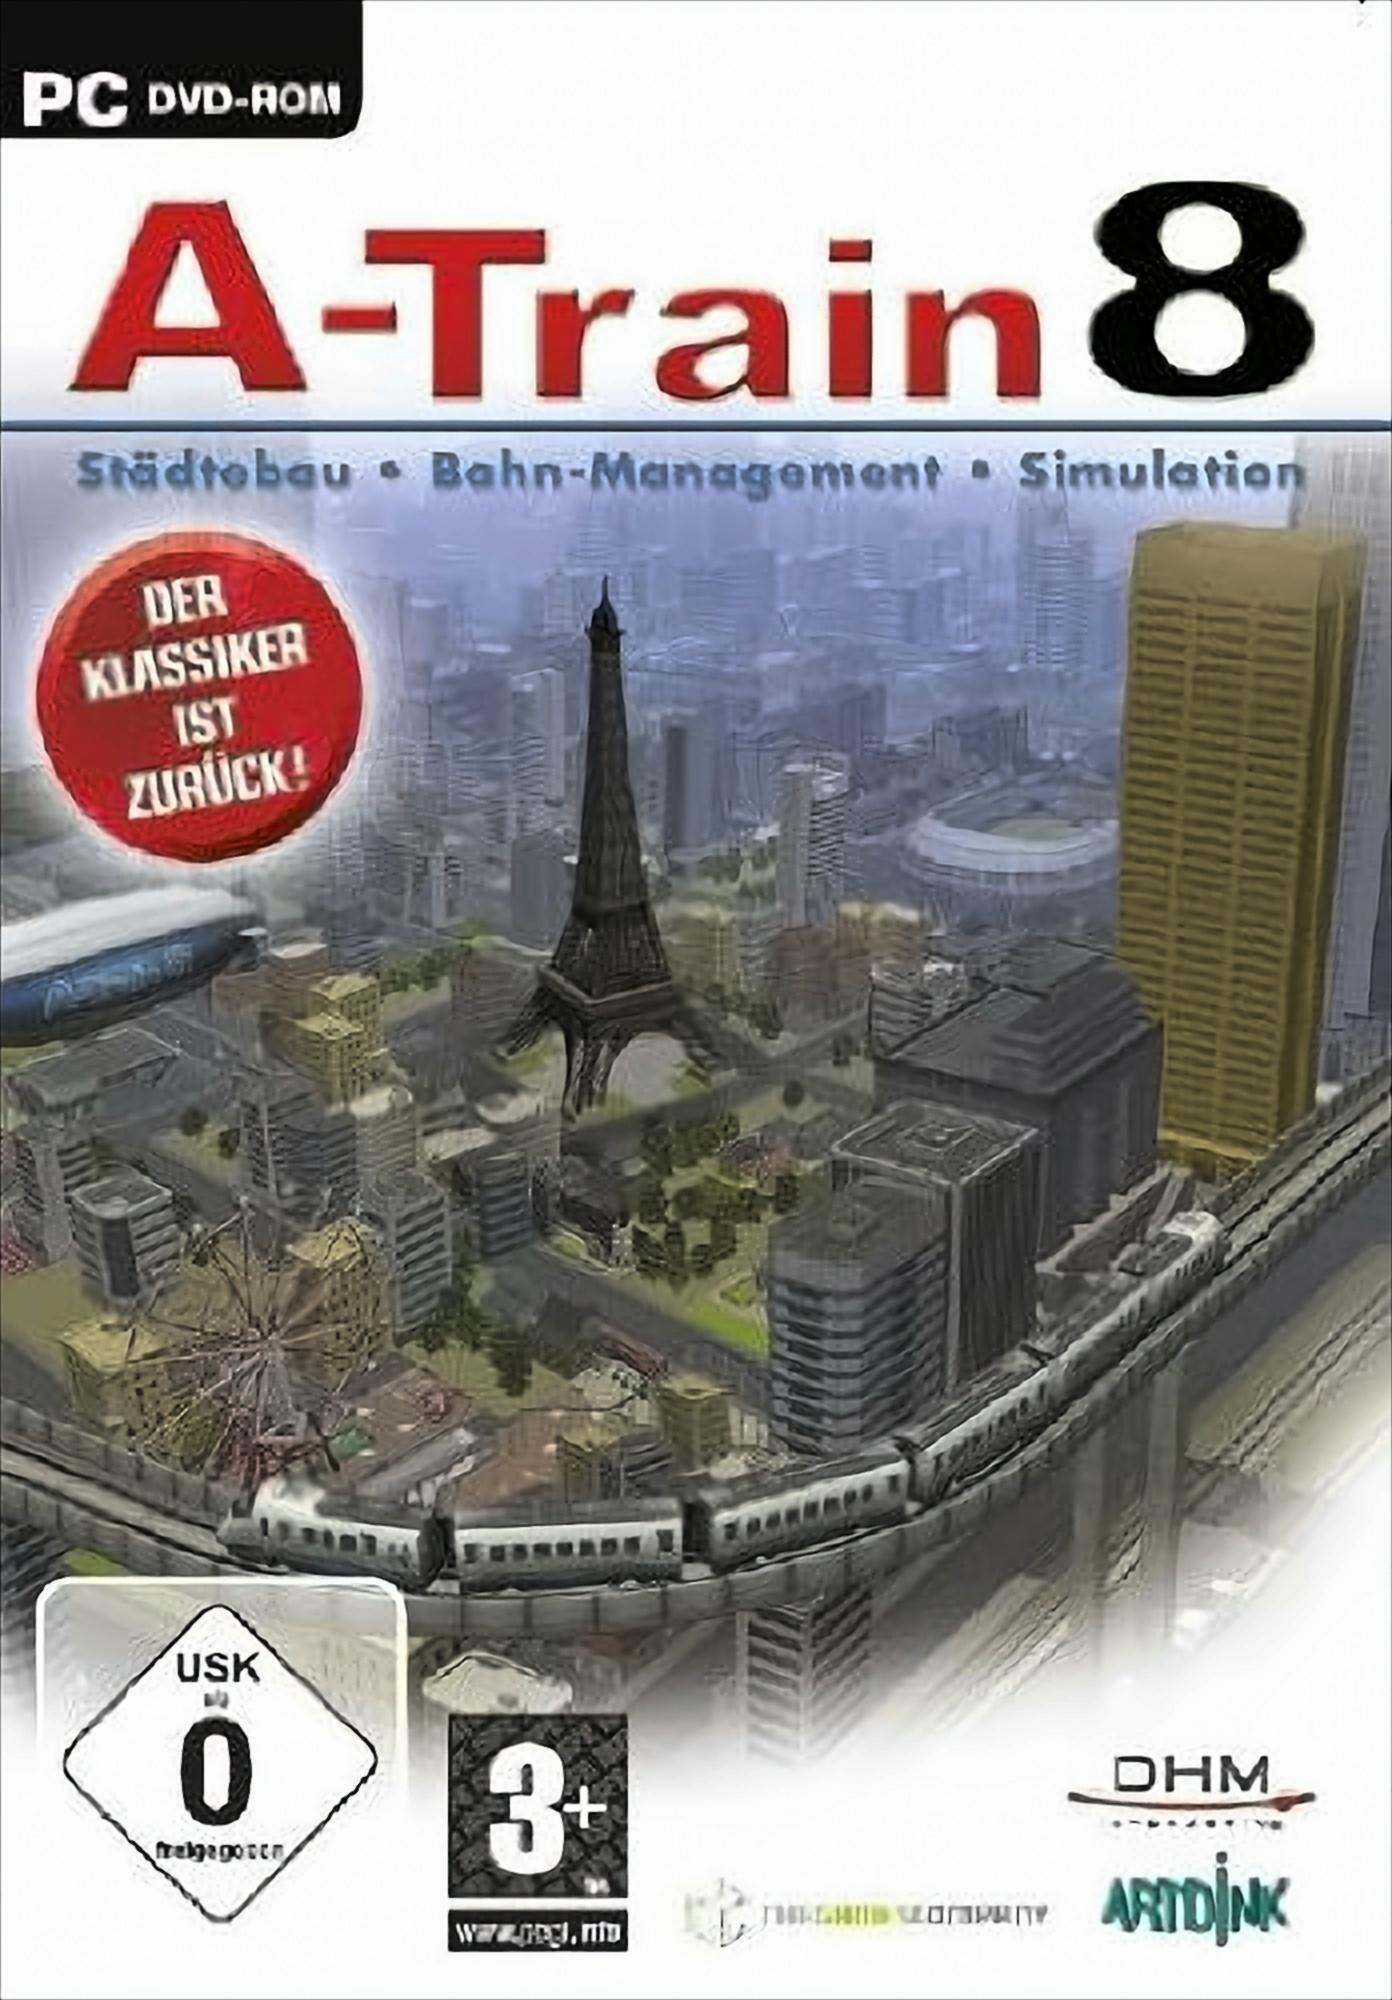 A-Train 8 - [PC